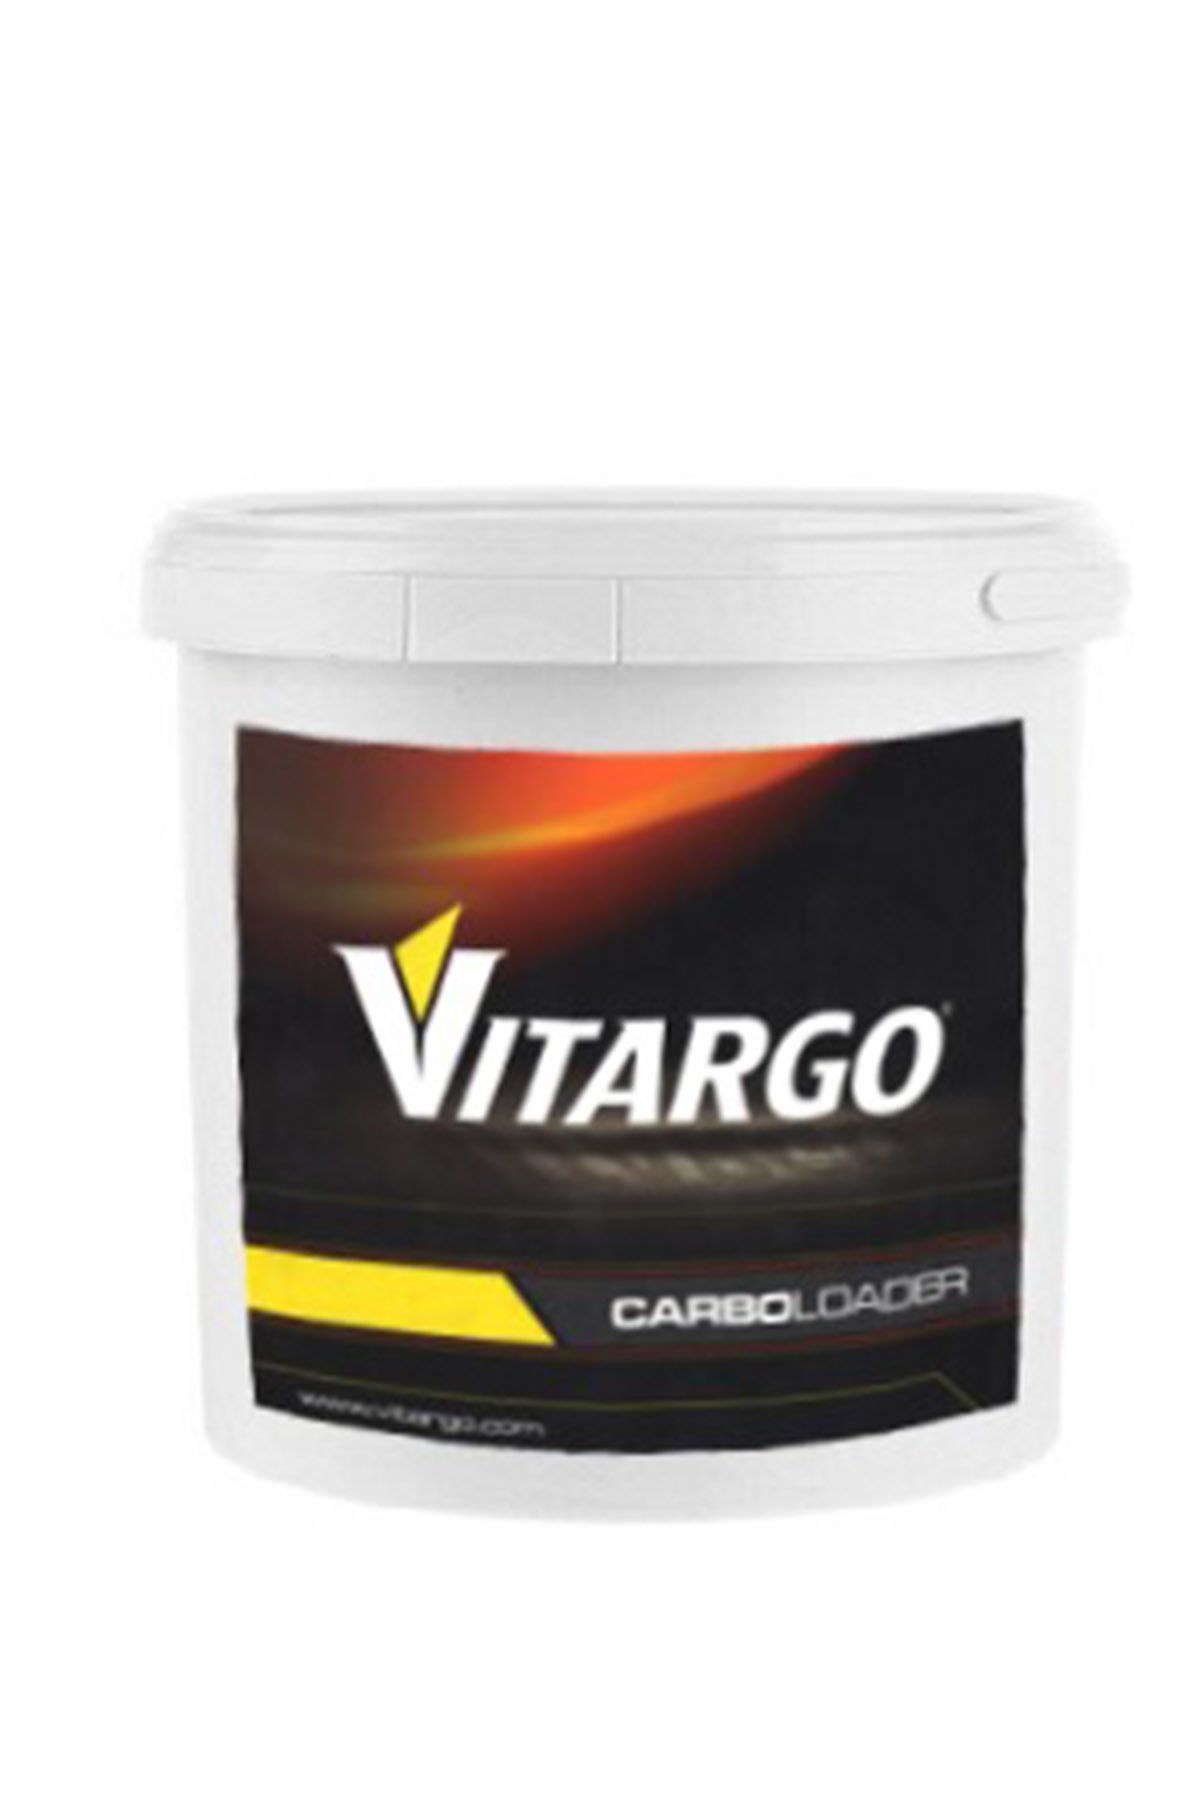 Vitargo Carboloader 1000 g SPAVTG021094